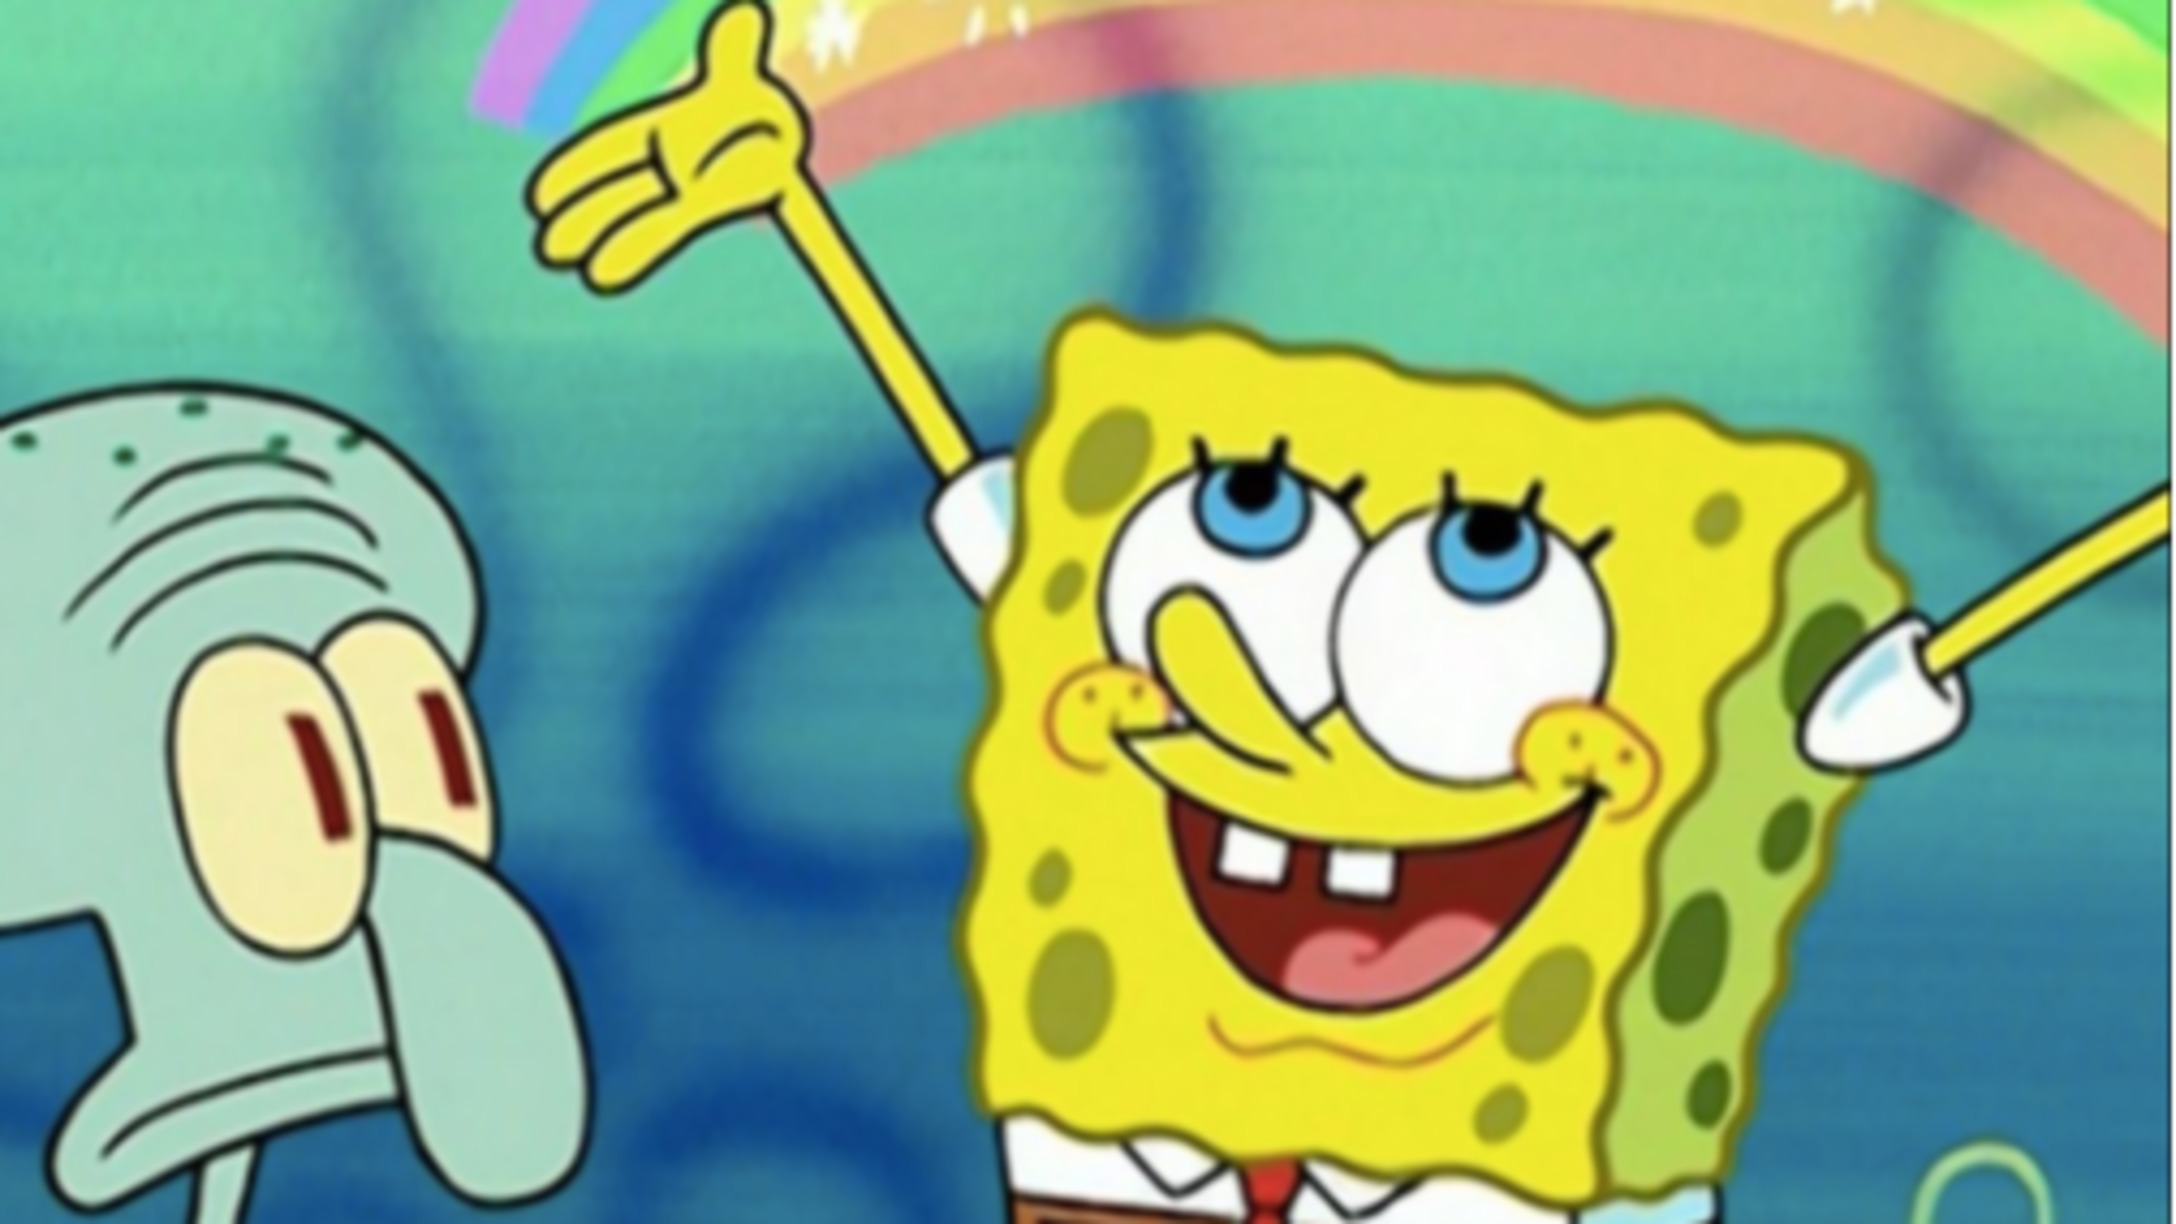 Nickelodeon Confirms Spongebob Is A Member Of The Lgbtq Community 0958